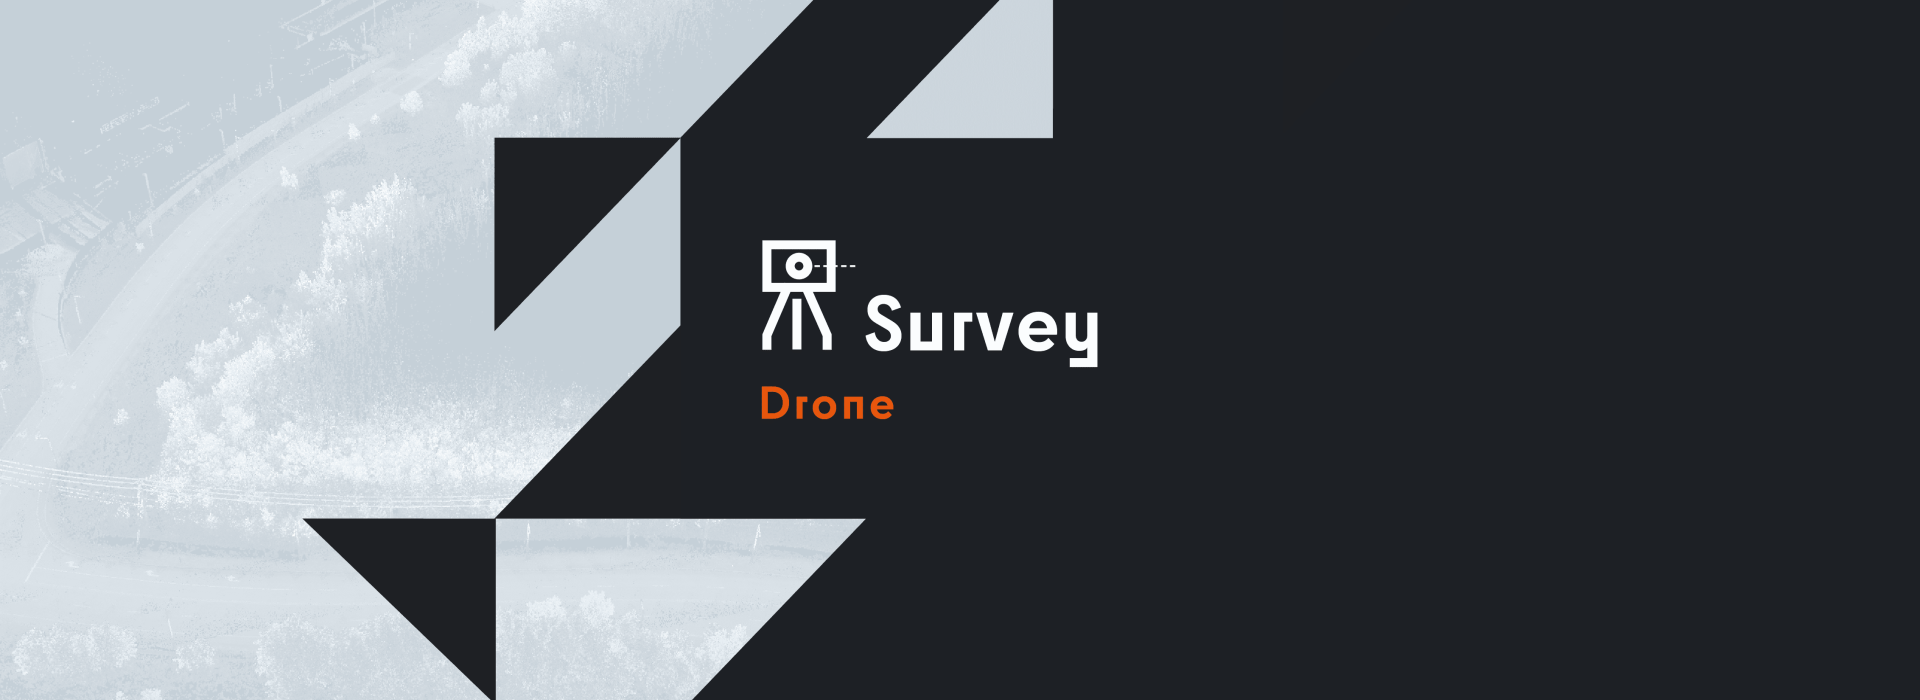 ANGLAIS_WebBanner_Survey - Drone